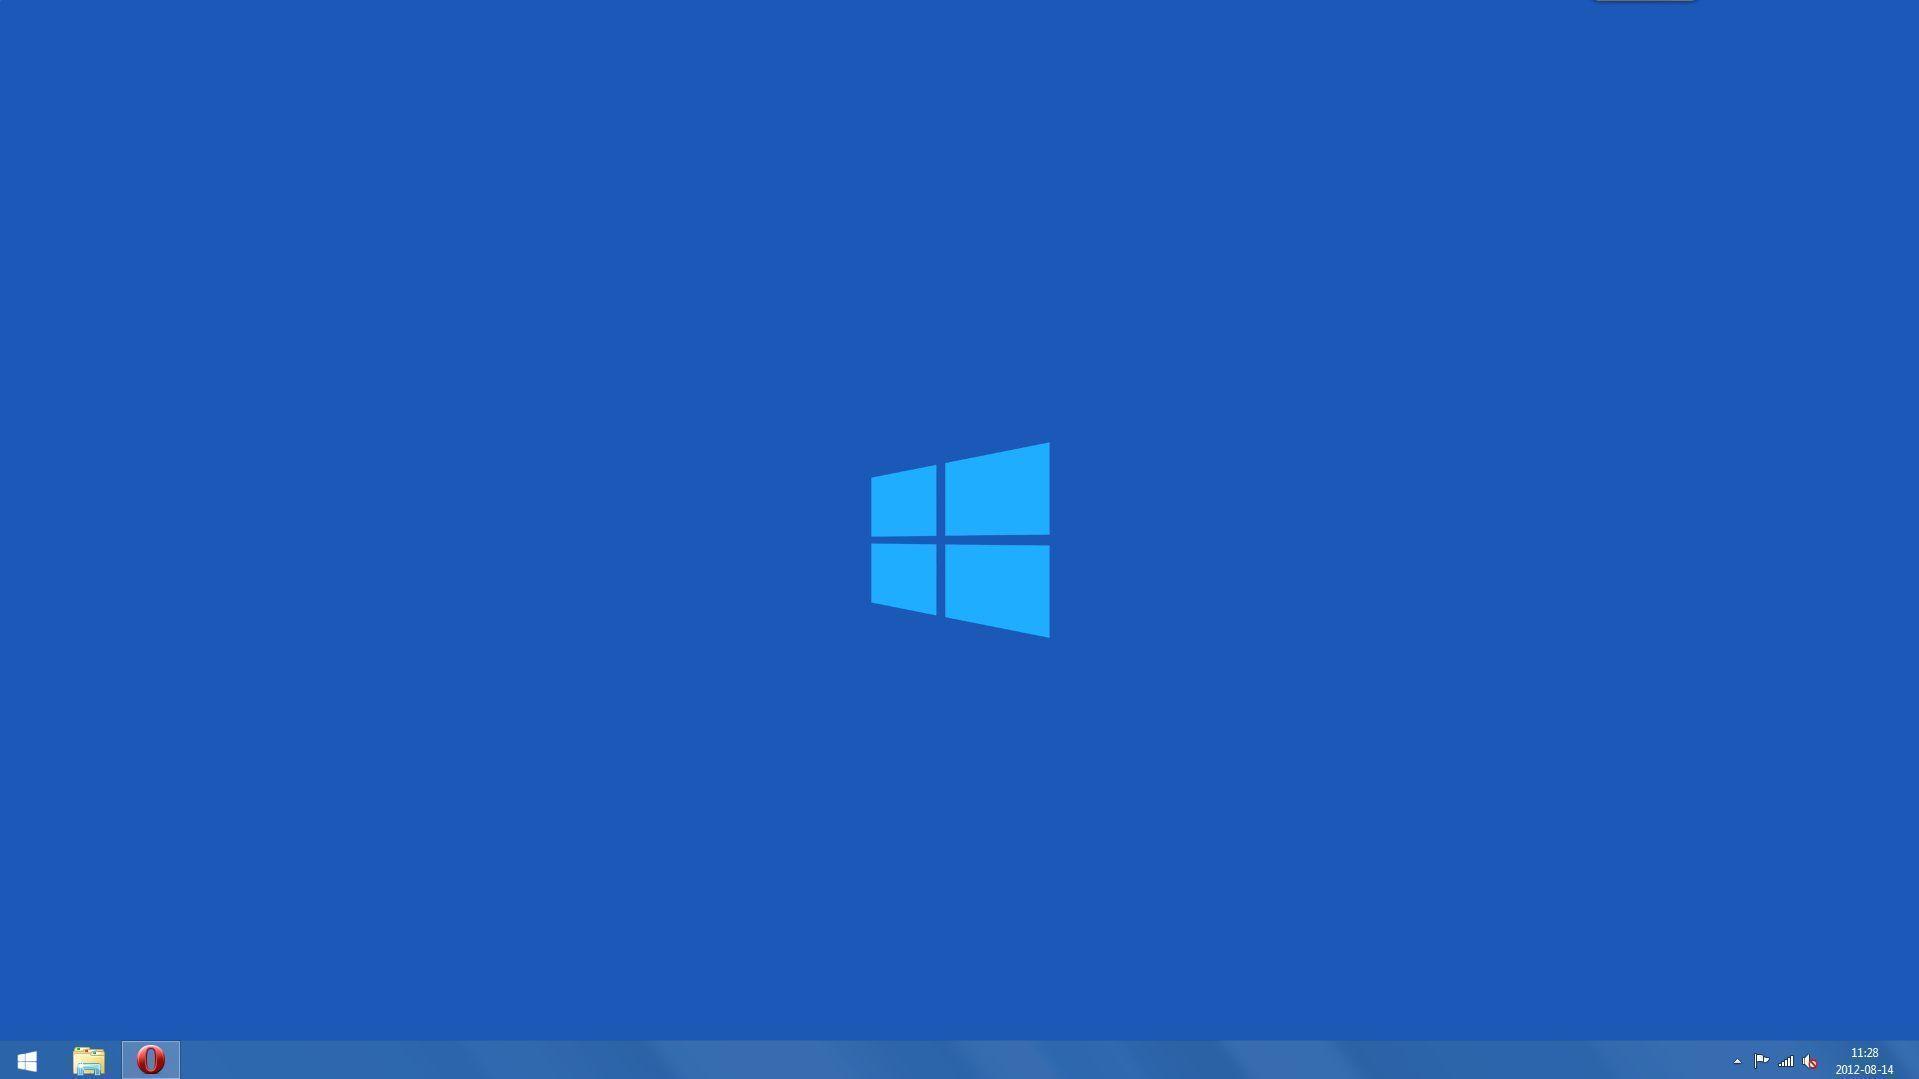 Windows 7 Home Premium Wallpapers - Wallpaper Cave